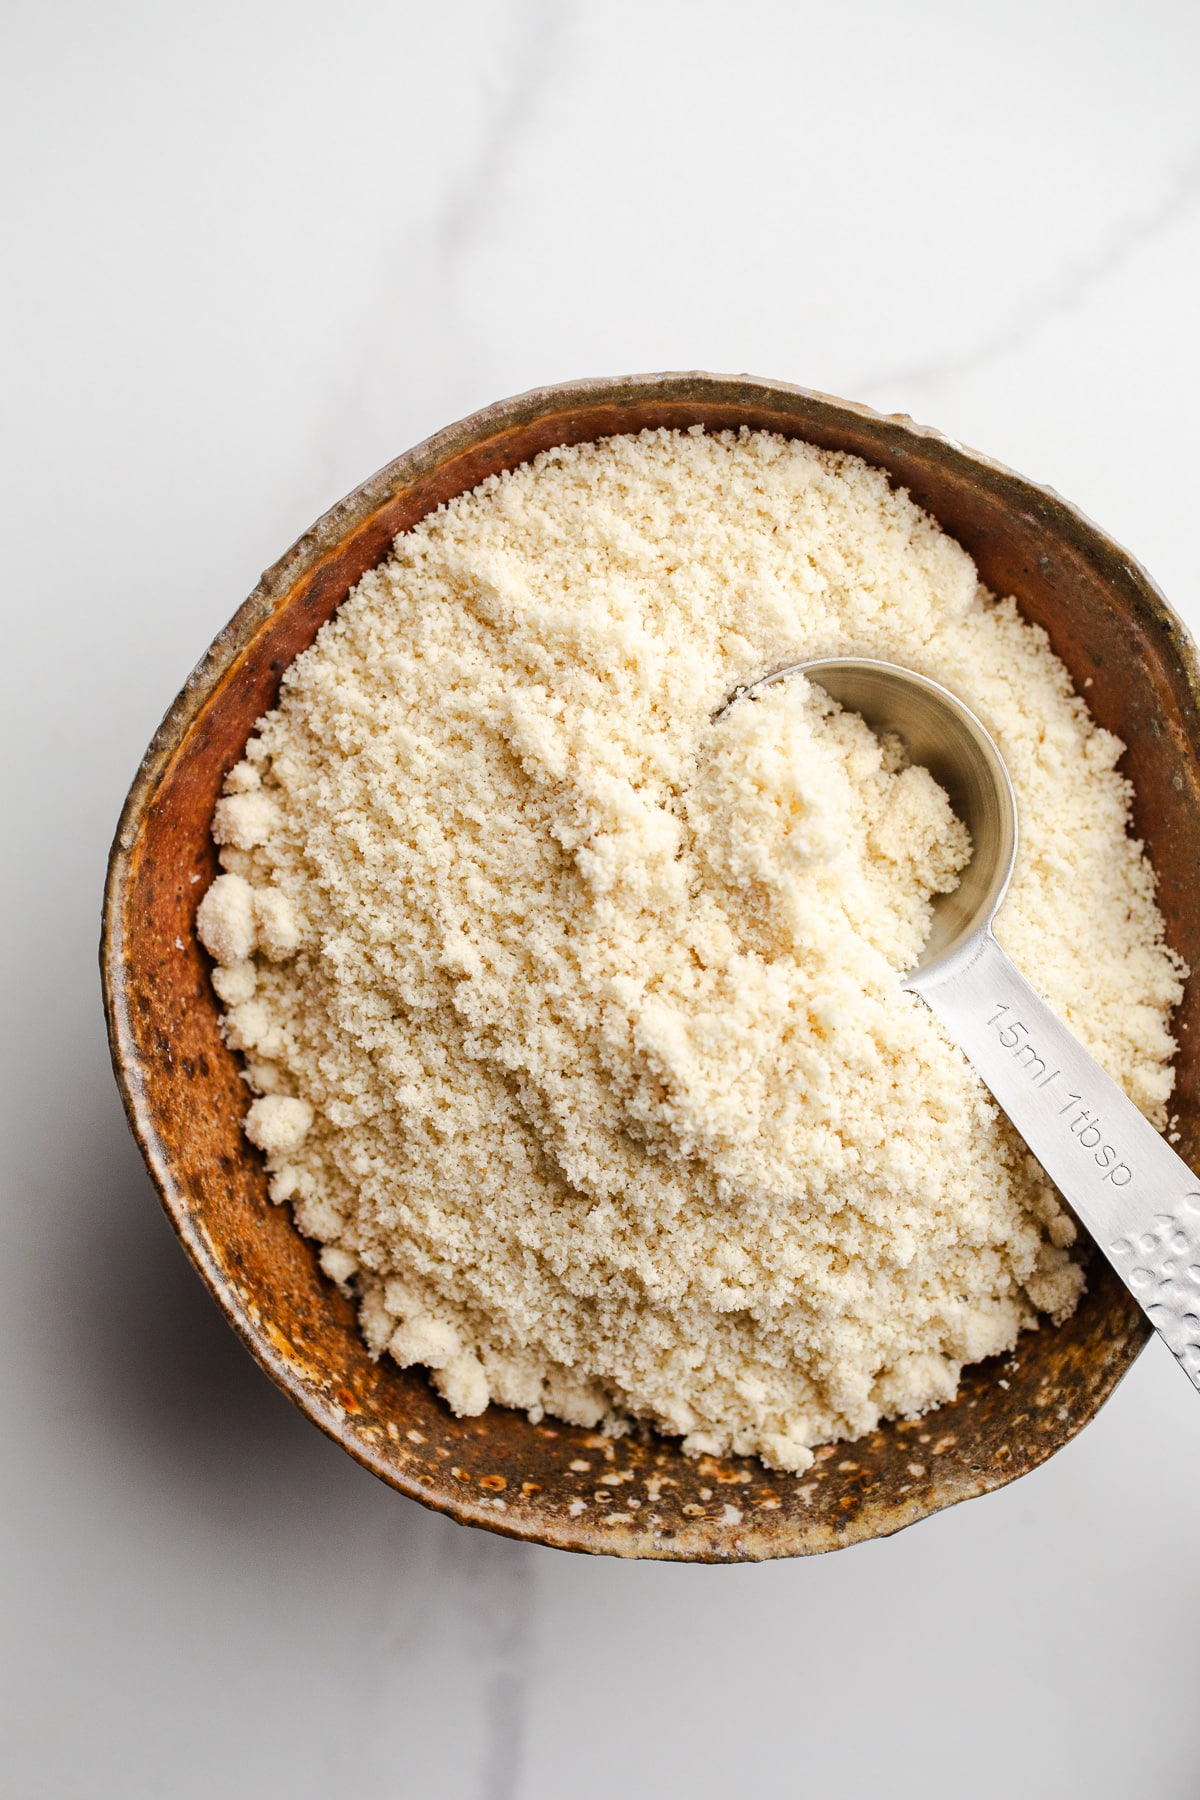 Almond flour in a bowl.